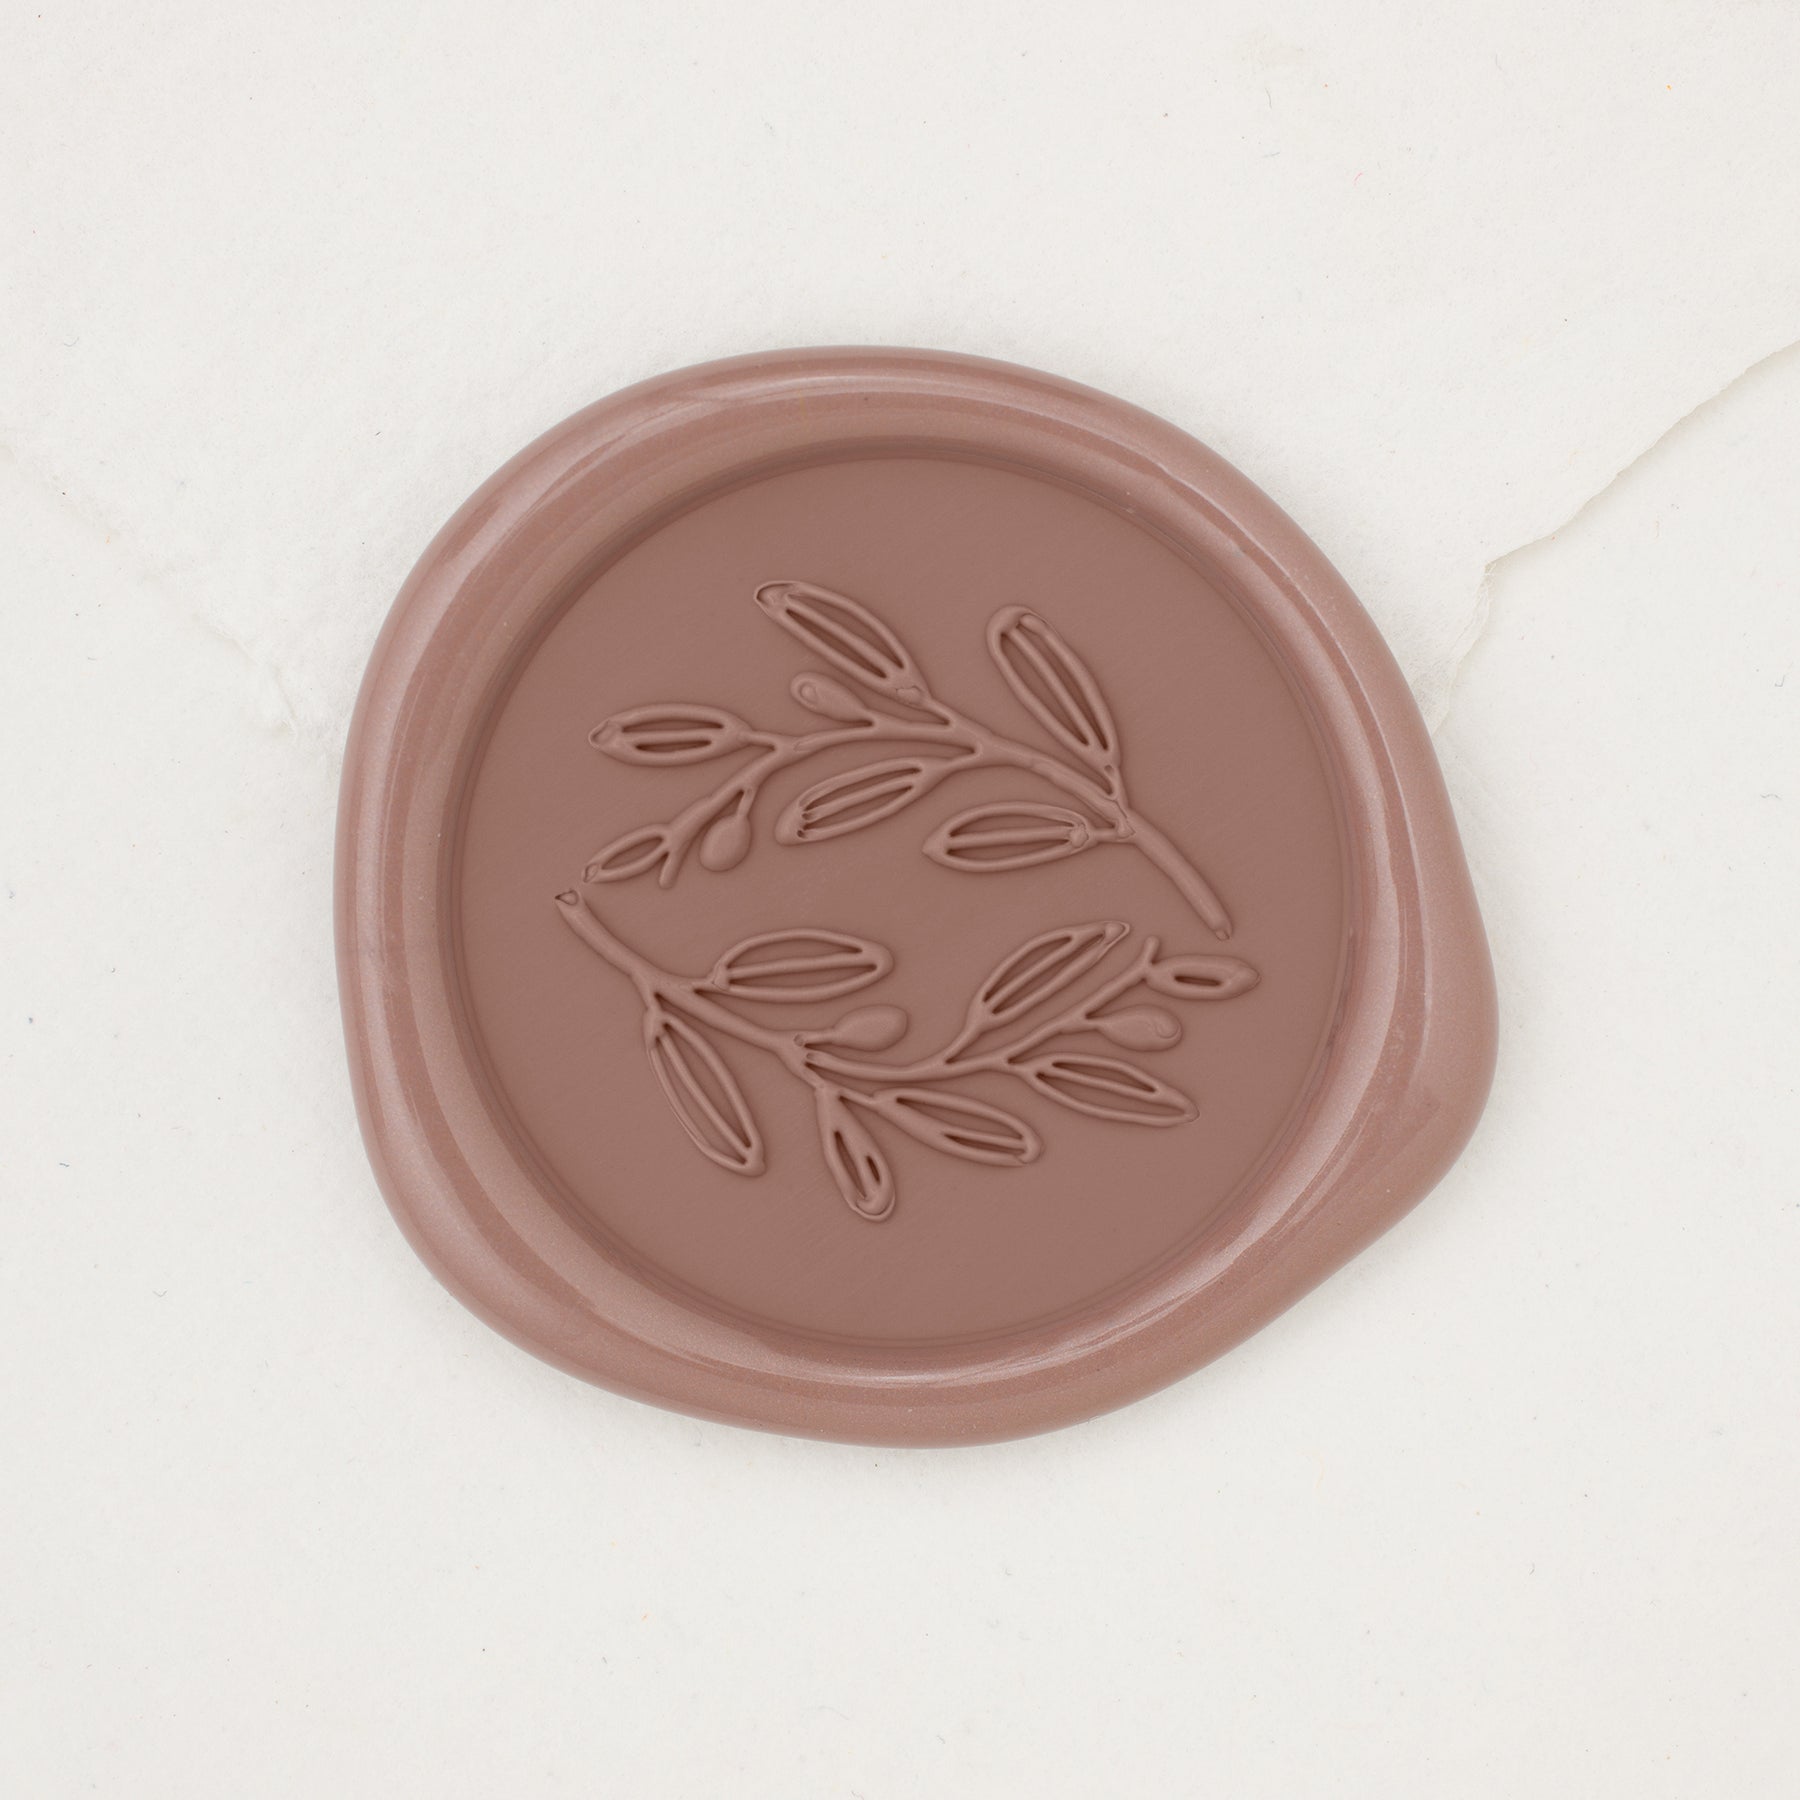 🍀Mushroom Wreath Wax Seal Stamp Sealing Stamper, Small Nature